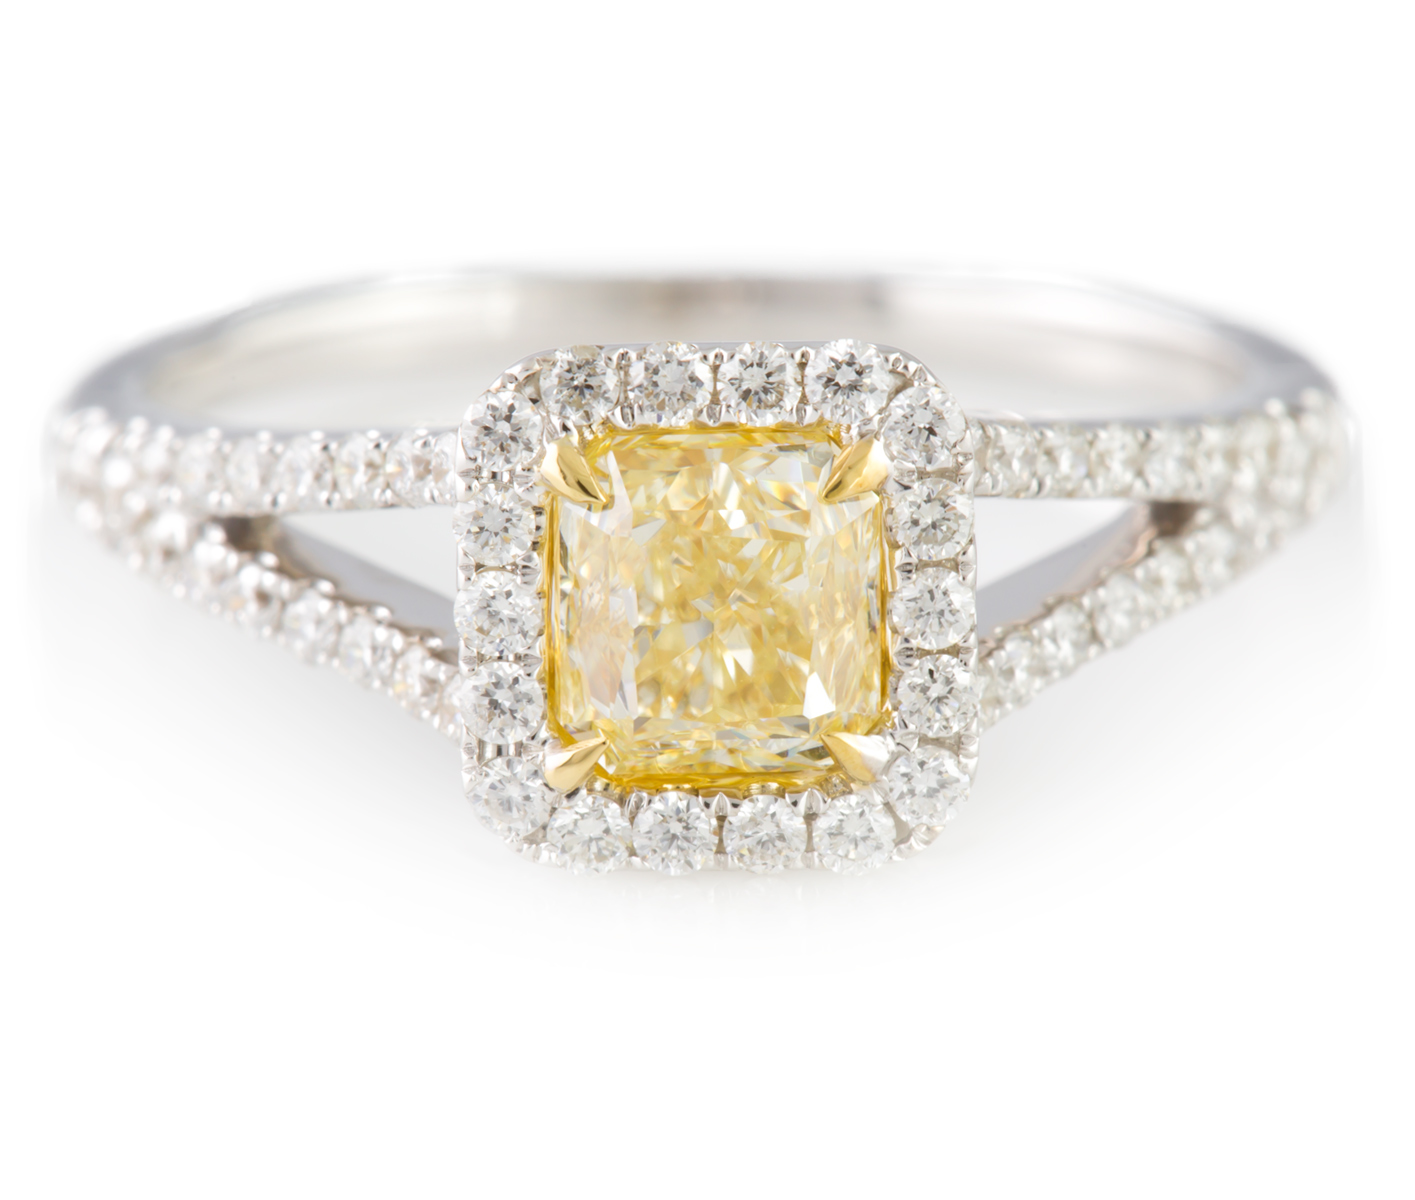 18kt Yellow/White Gold Cushion Cut Center Diamond Ring